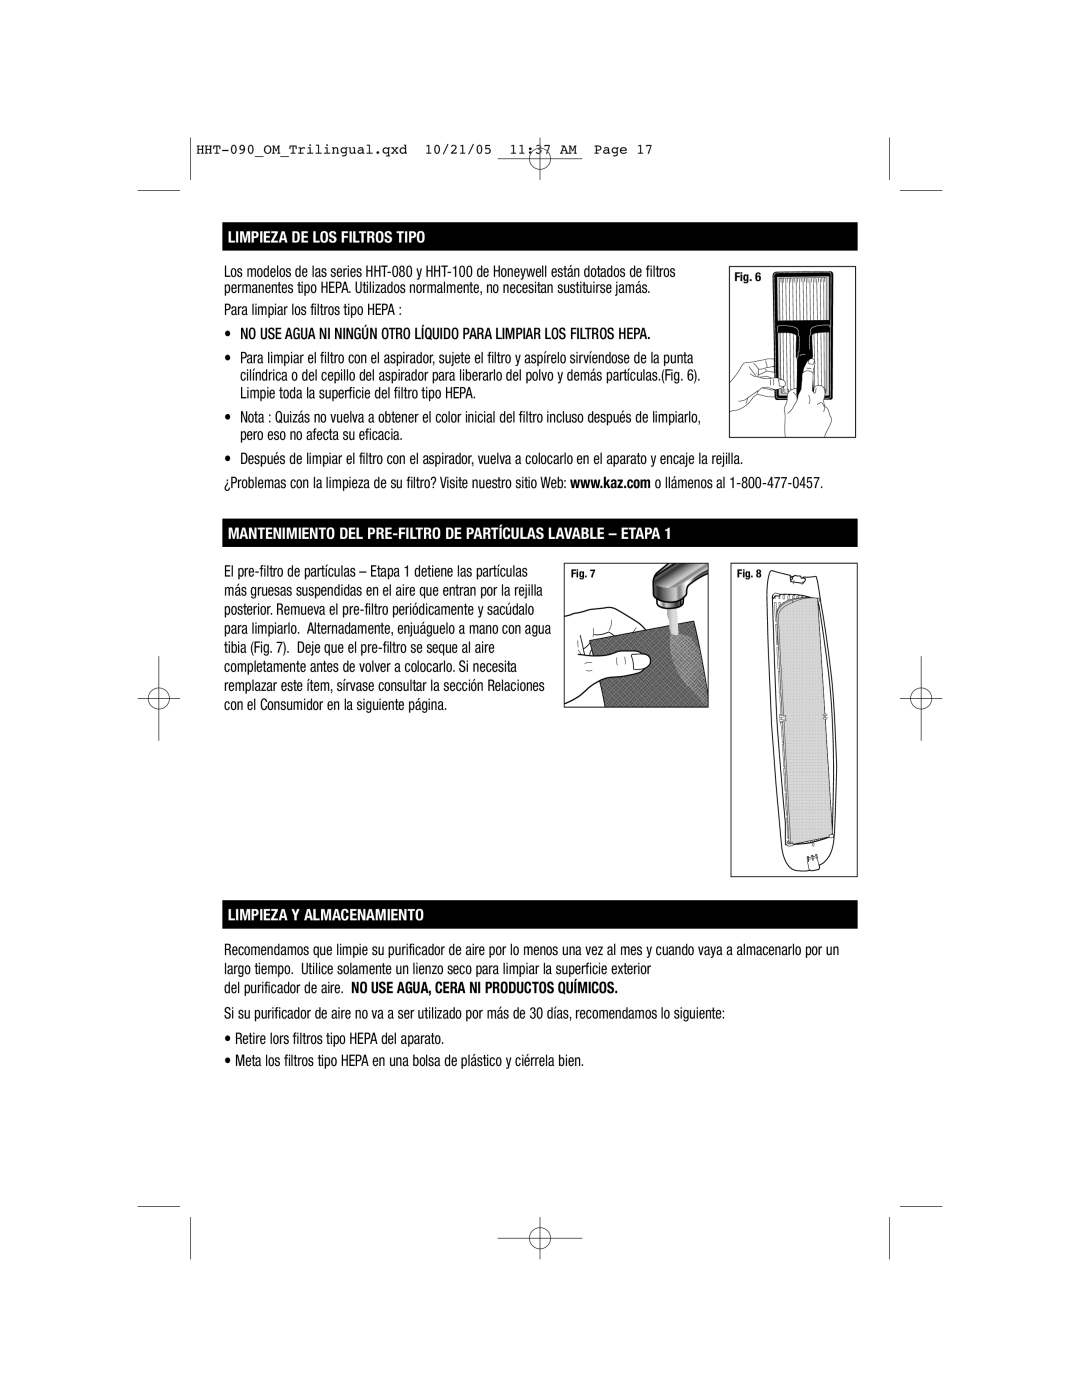 Honeywell HHT-090 important safety instructions Limpieza Y Almacenamiento 